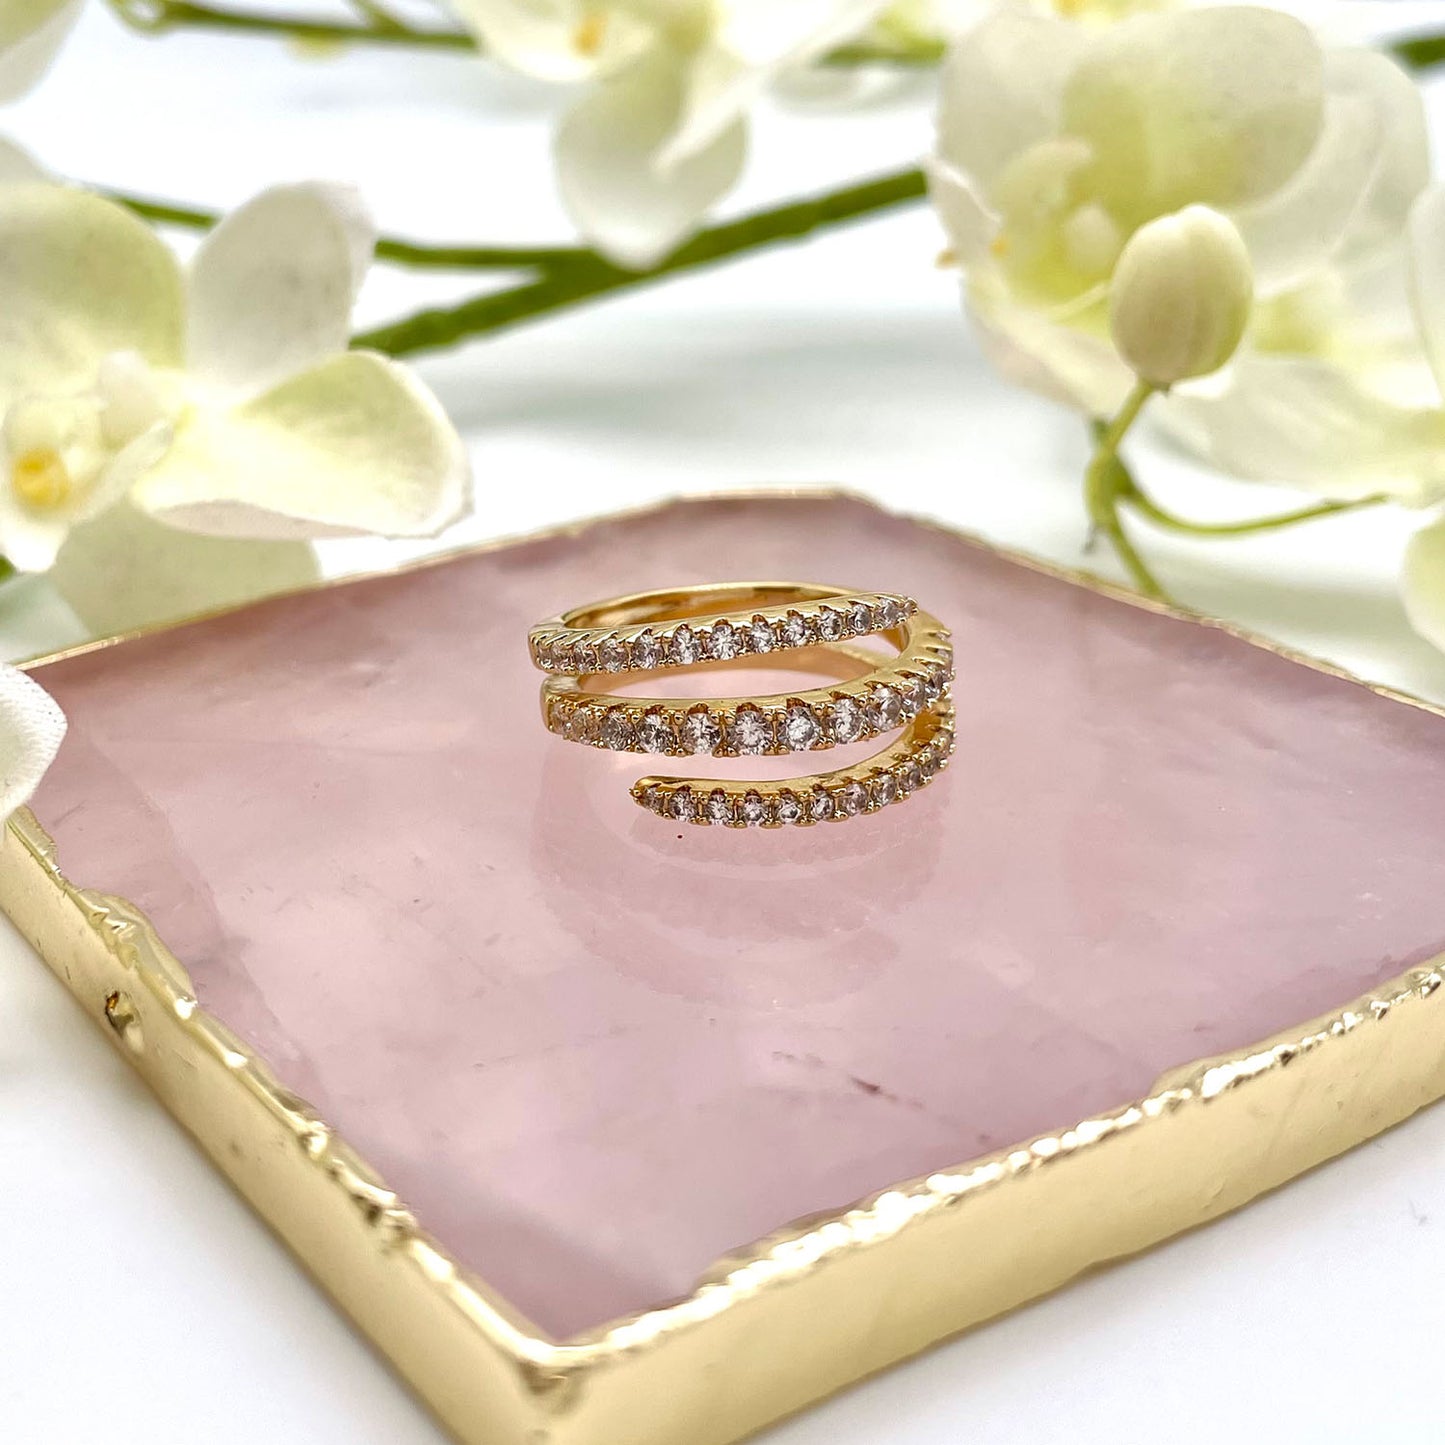 Cali Pave CZ Diamond Wrap Ring, Gold - Zahra Jewelry